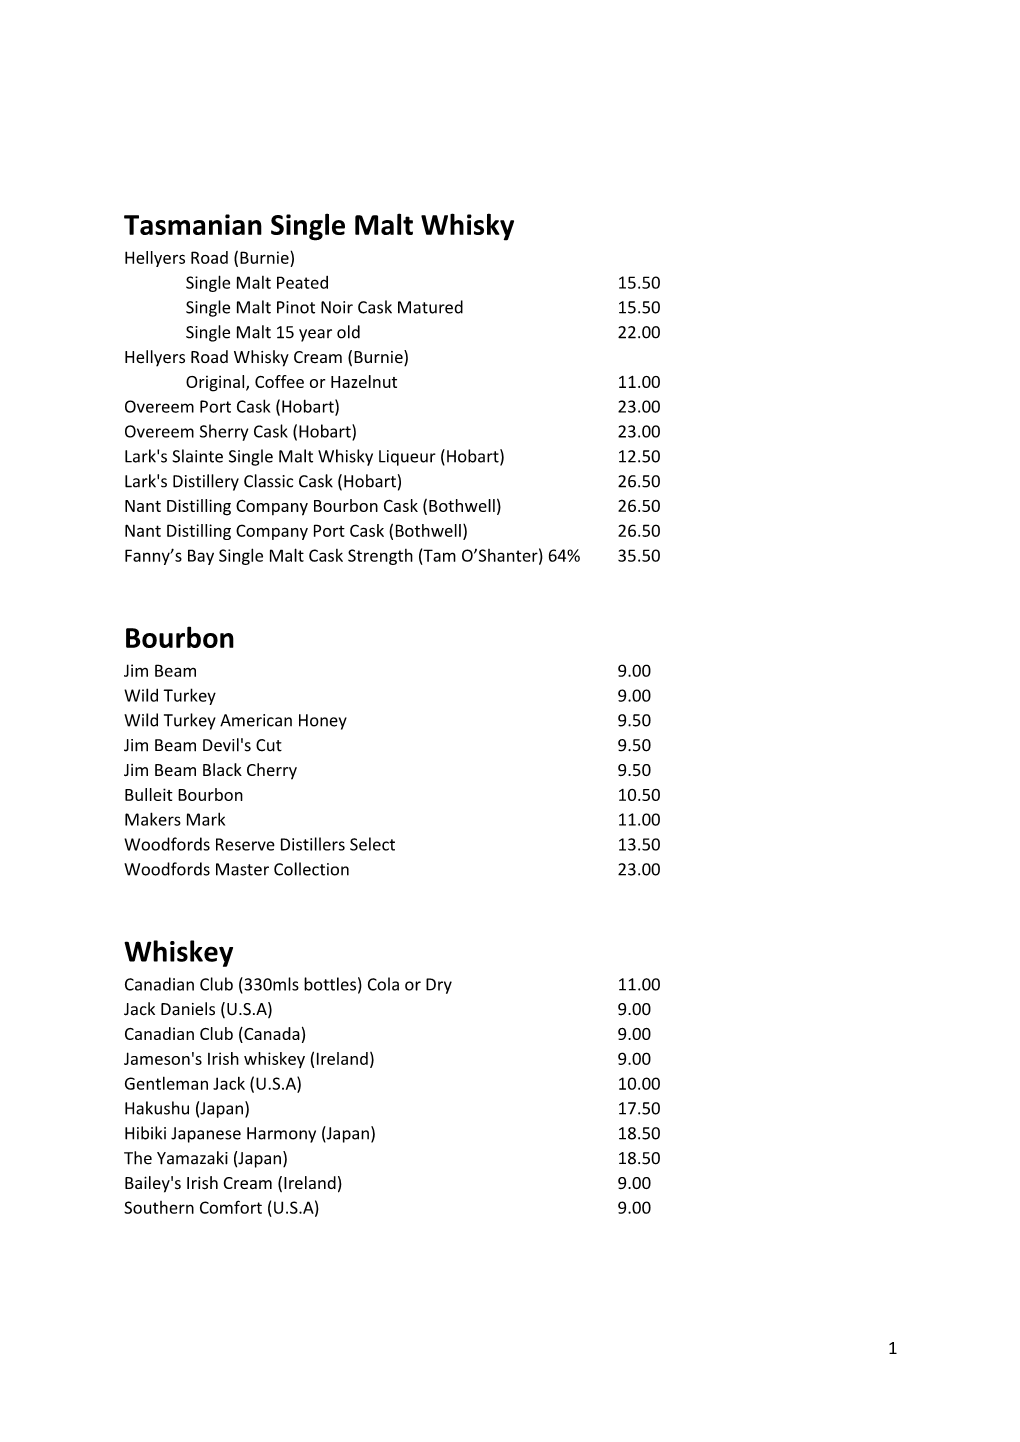 Tasmanian Single Malt Whisky Bourbon Whiskey